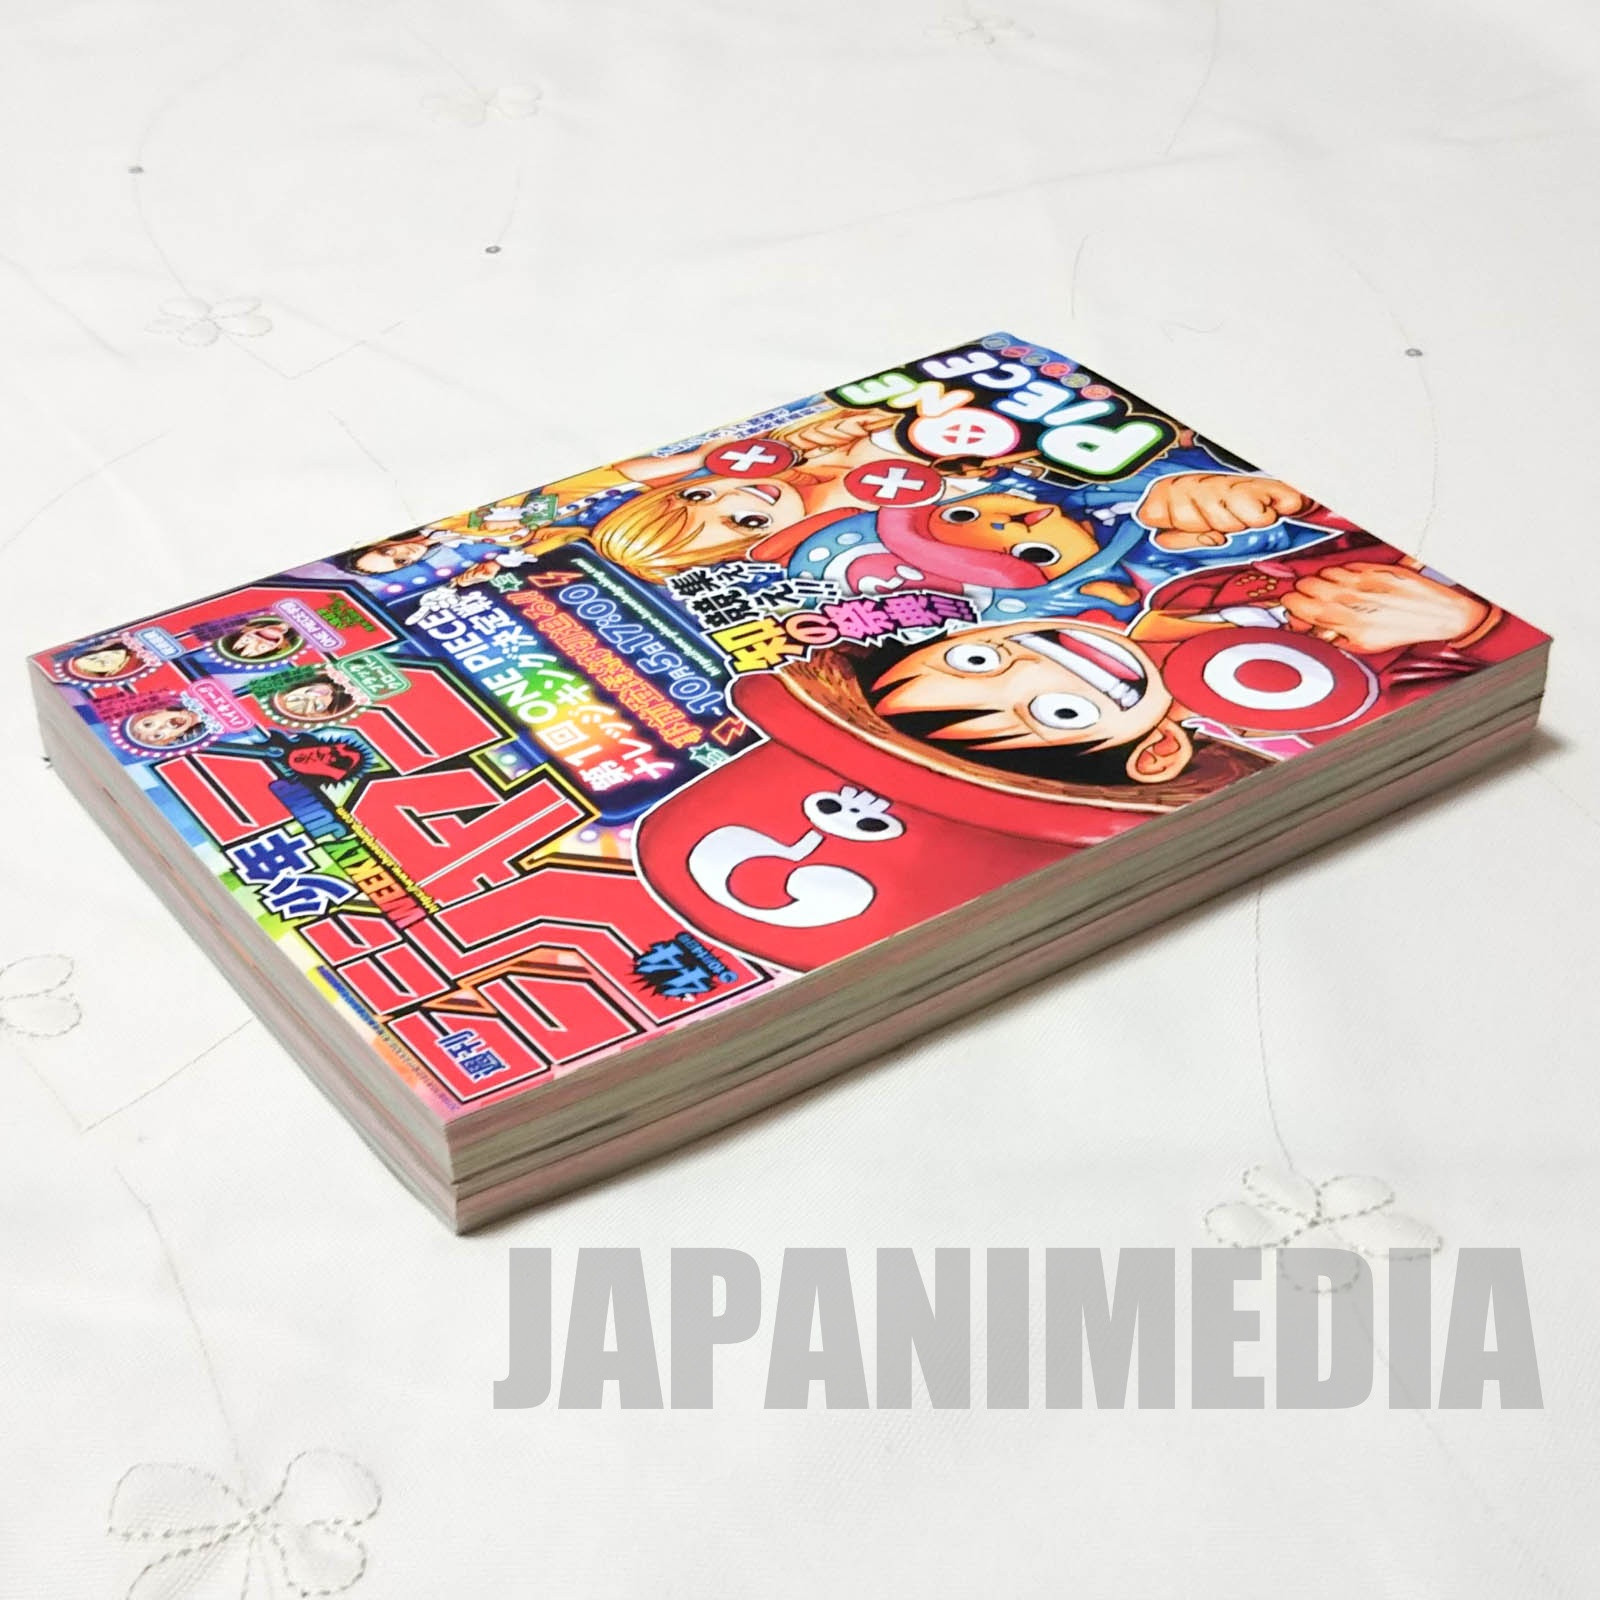 Weekly Shonen JUMP Vol.44 2019 One Piece / Japanese Magazine JAPAN MANGA